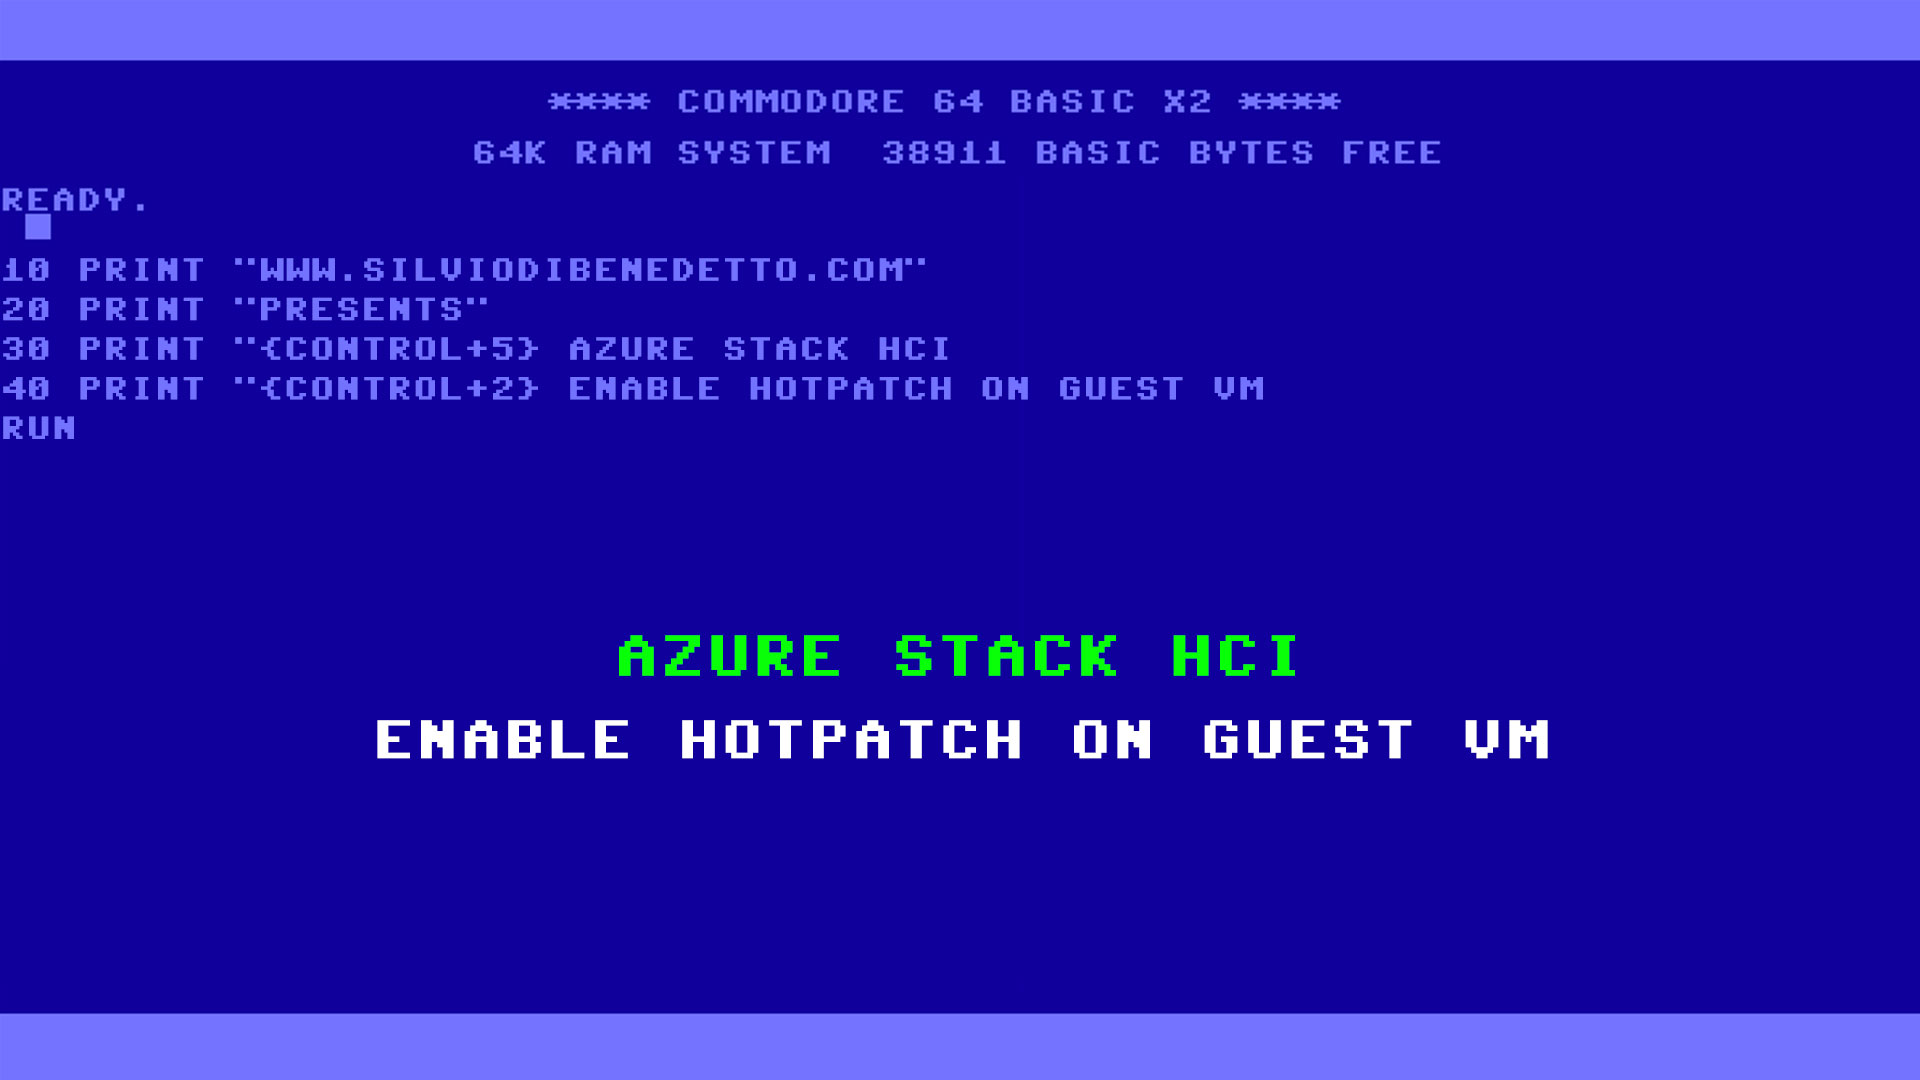 Azure Stack HCI Hotpatch